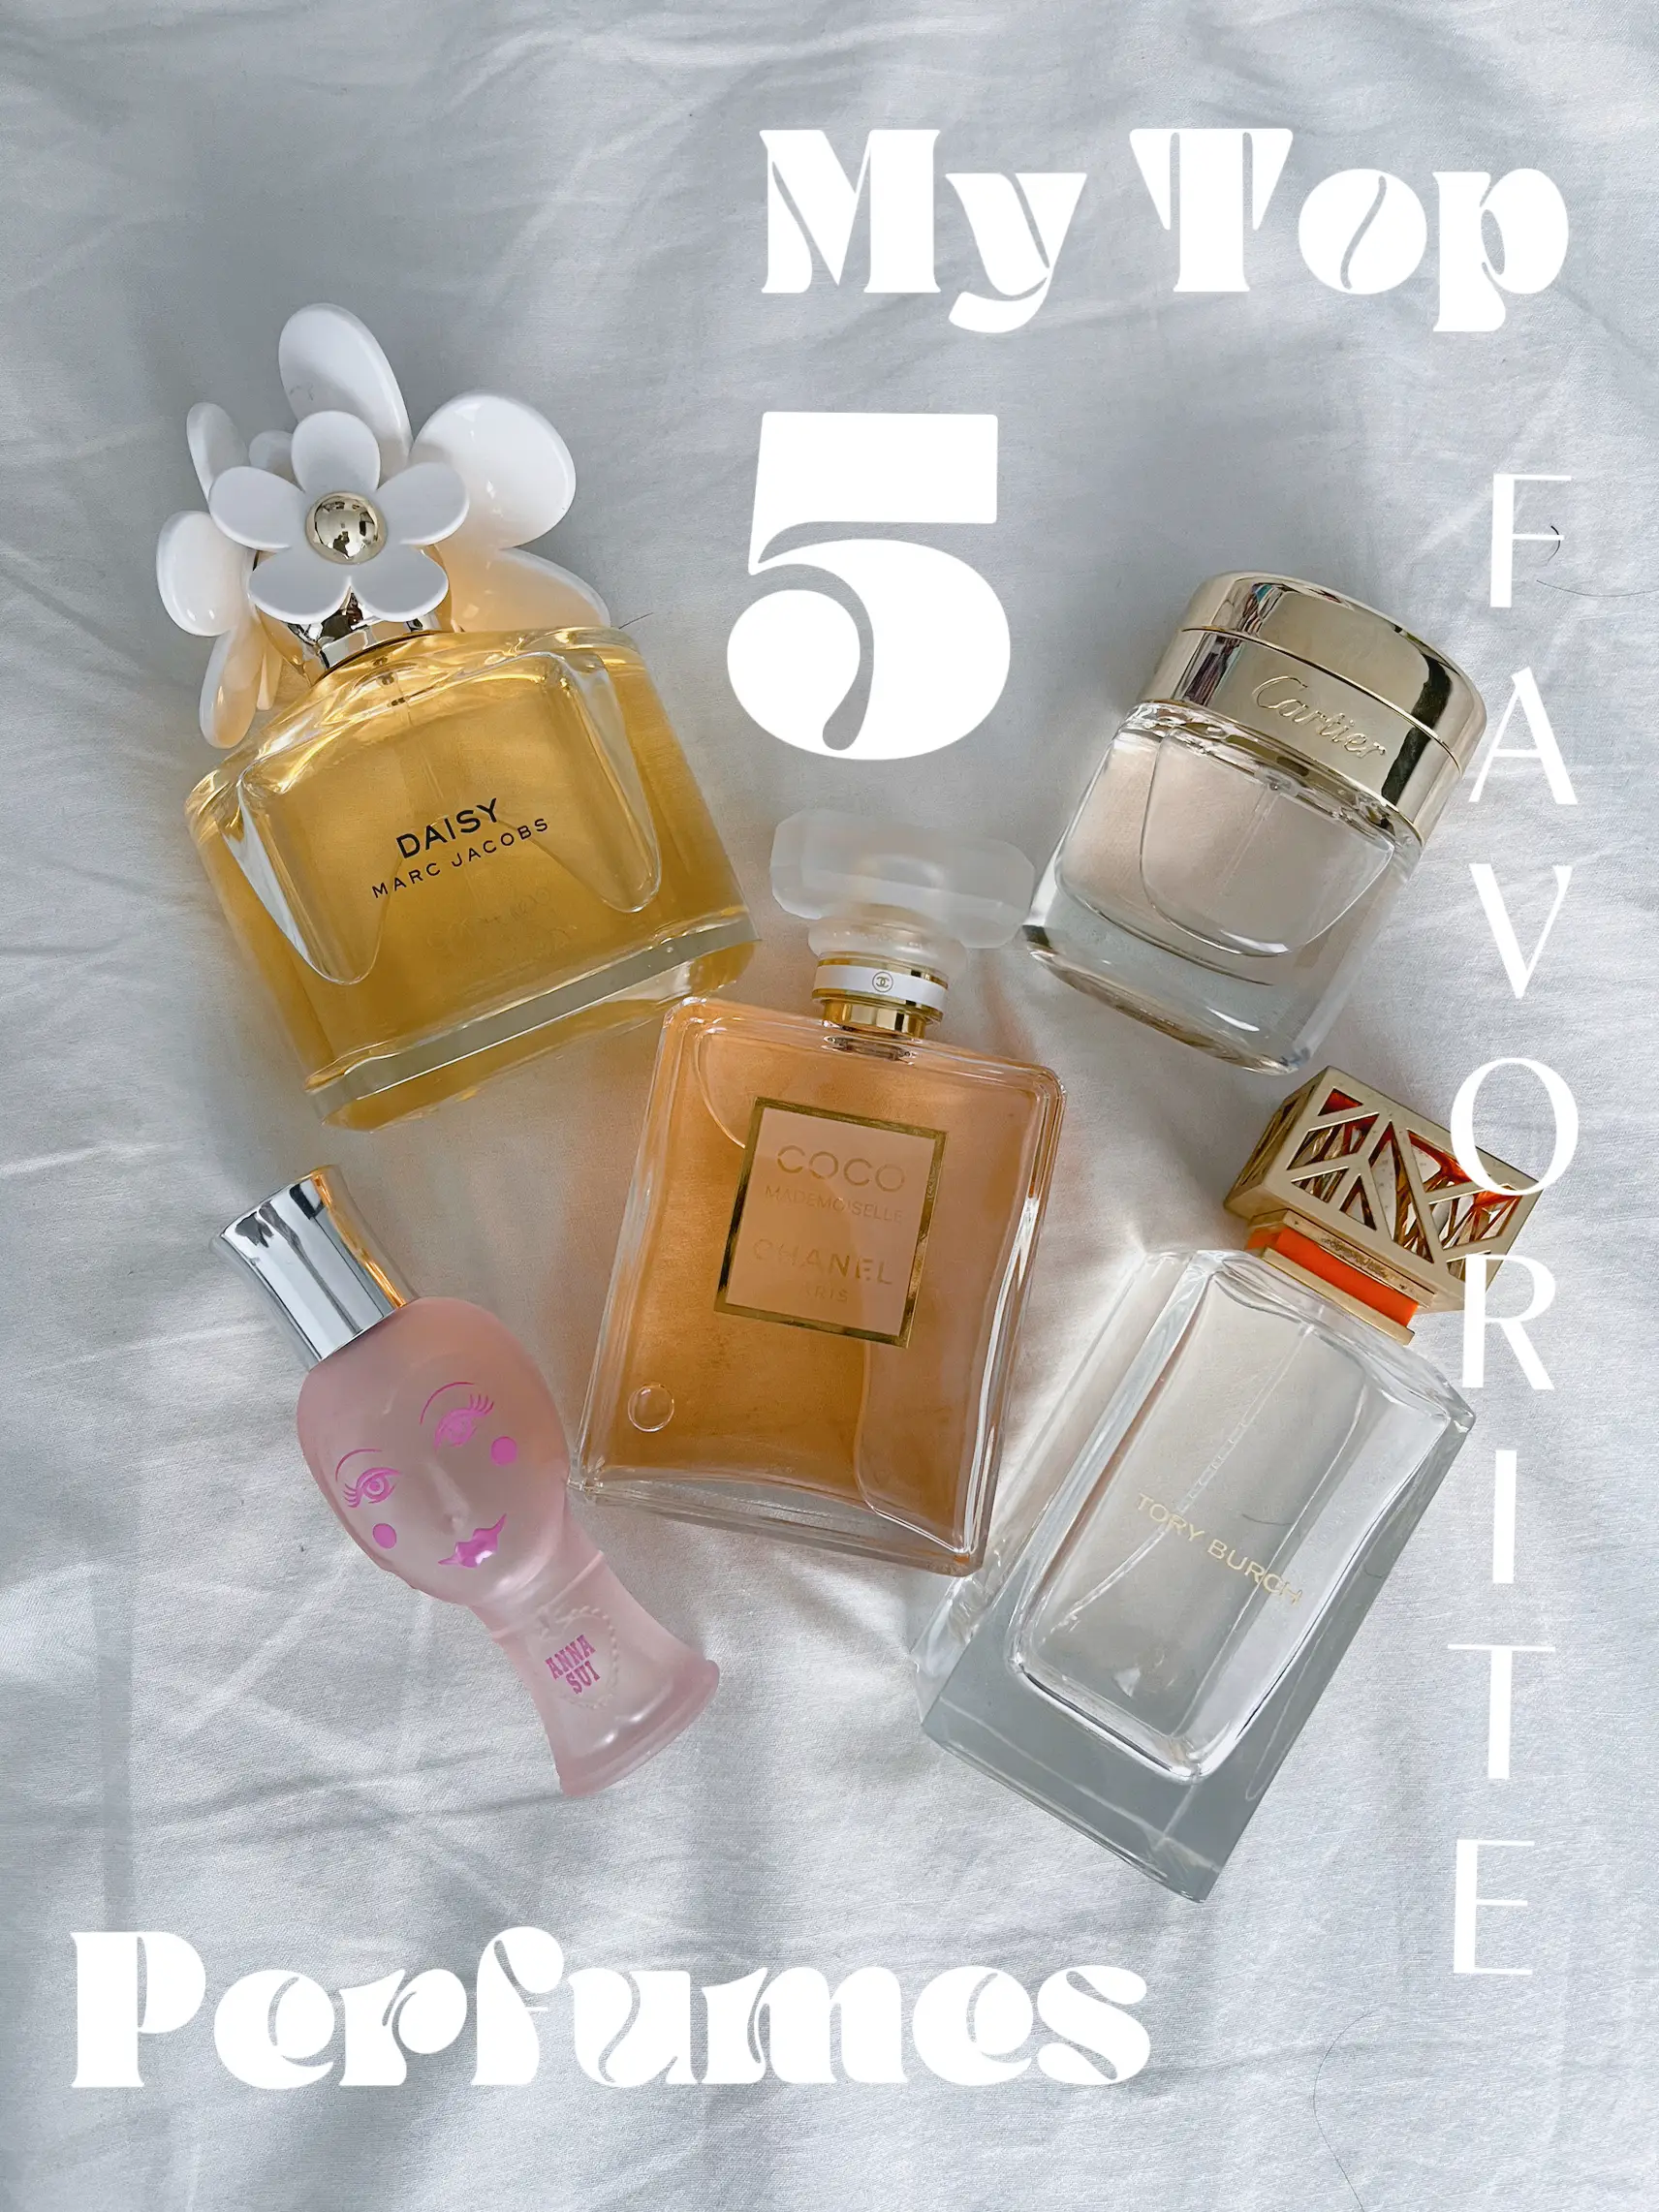 Tas berbentuk perfume CHANEL?, Gallery posted by Natasshanjani